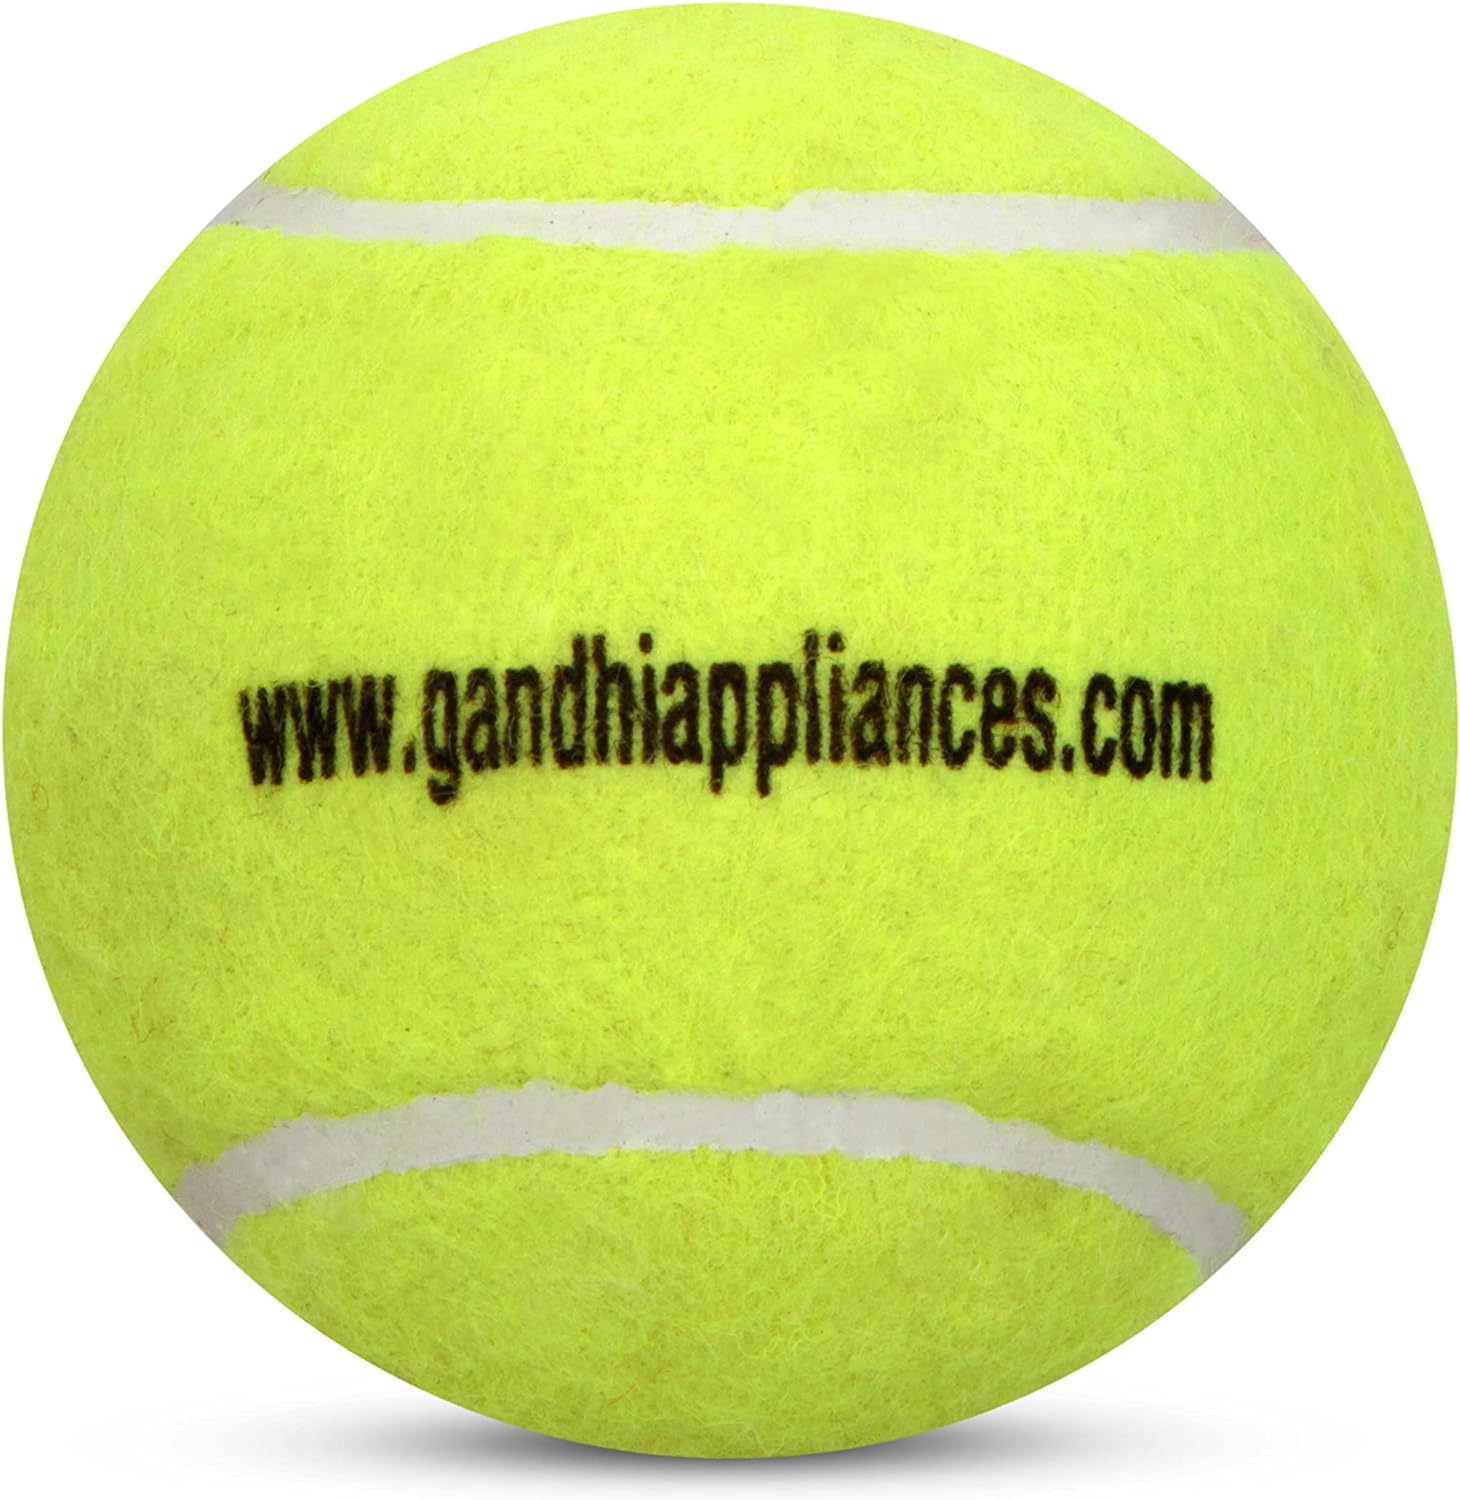 Nivia Heavy Tennis Ball Cricket Ball (Pack of 6)